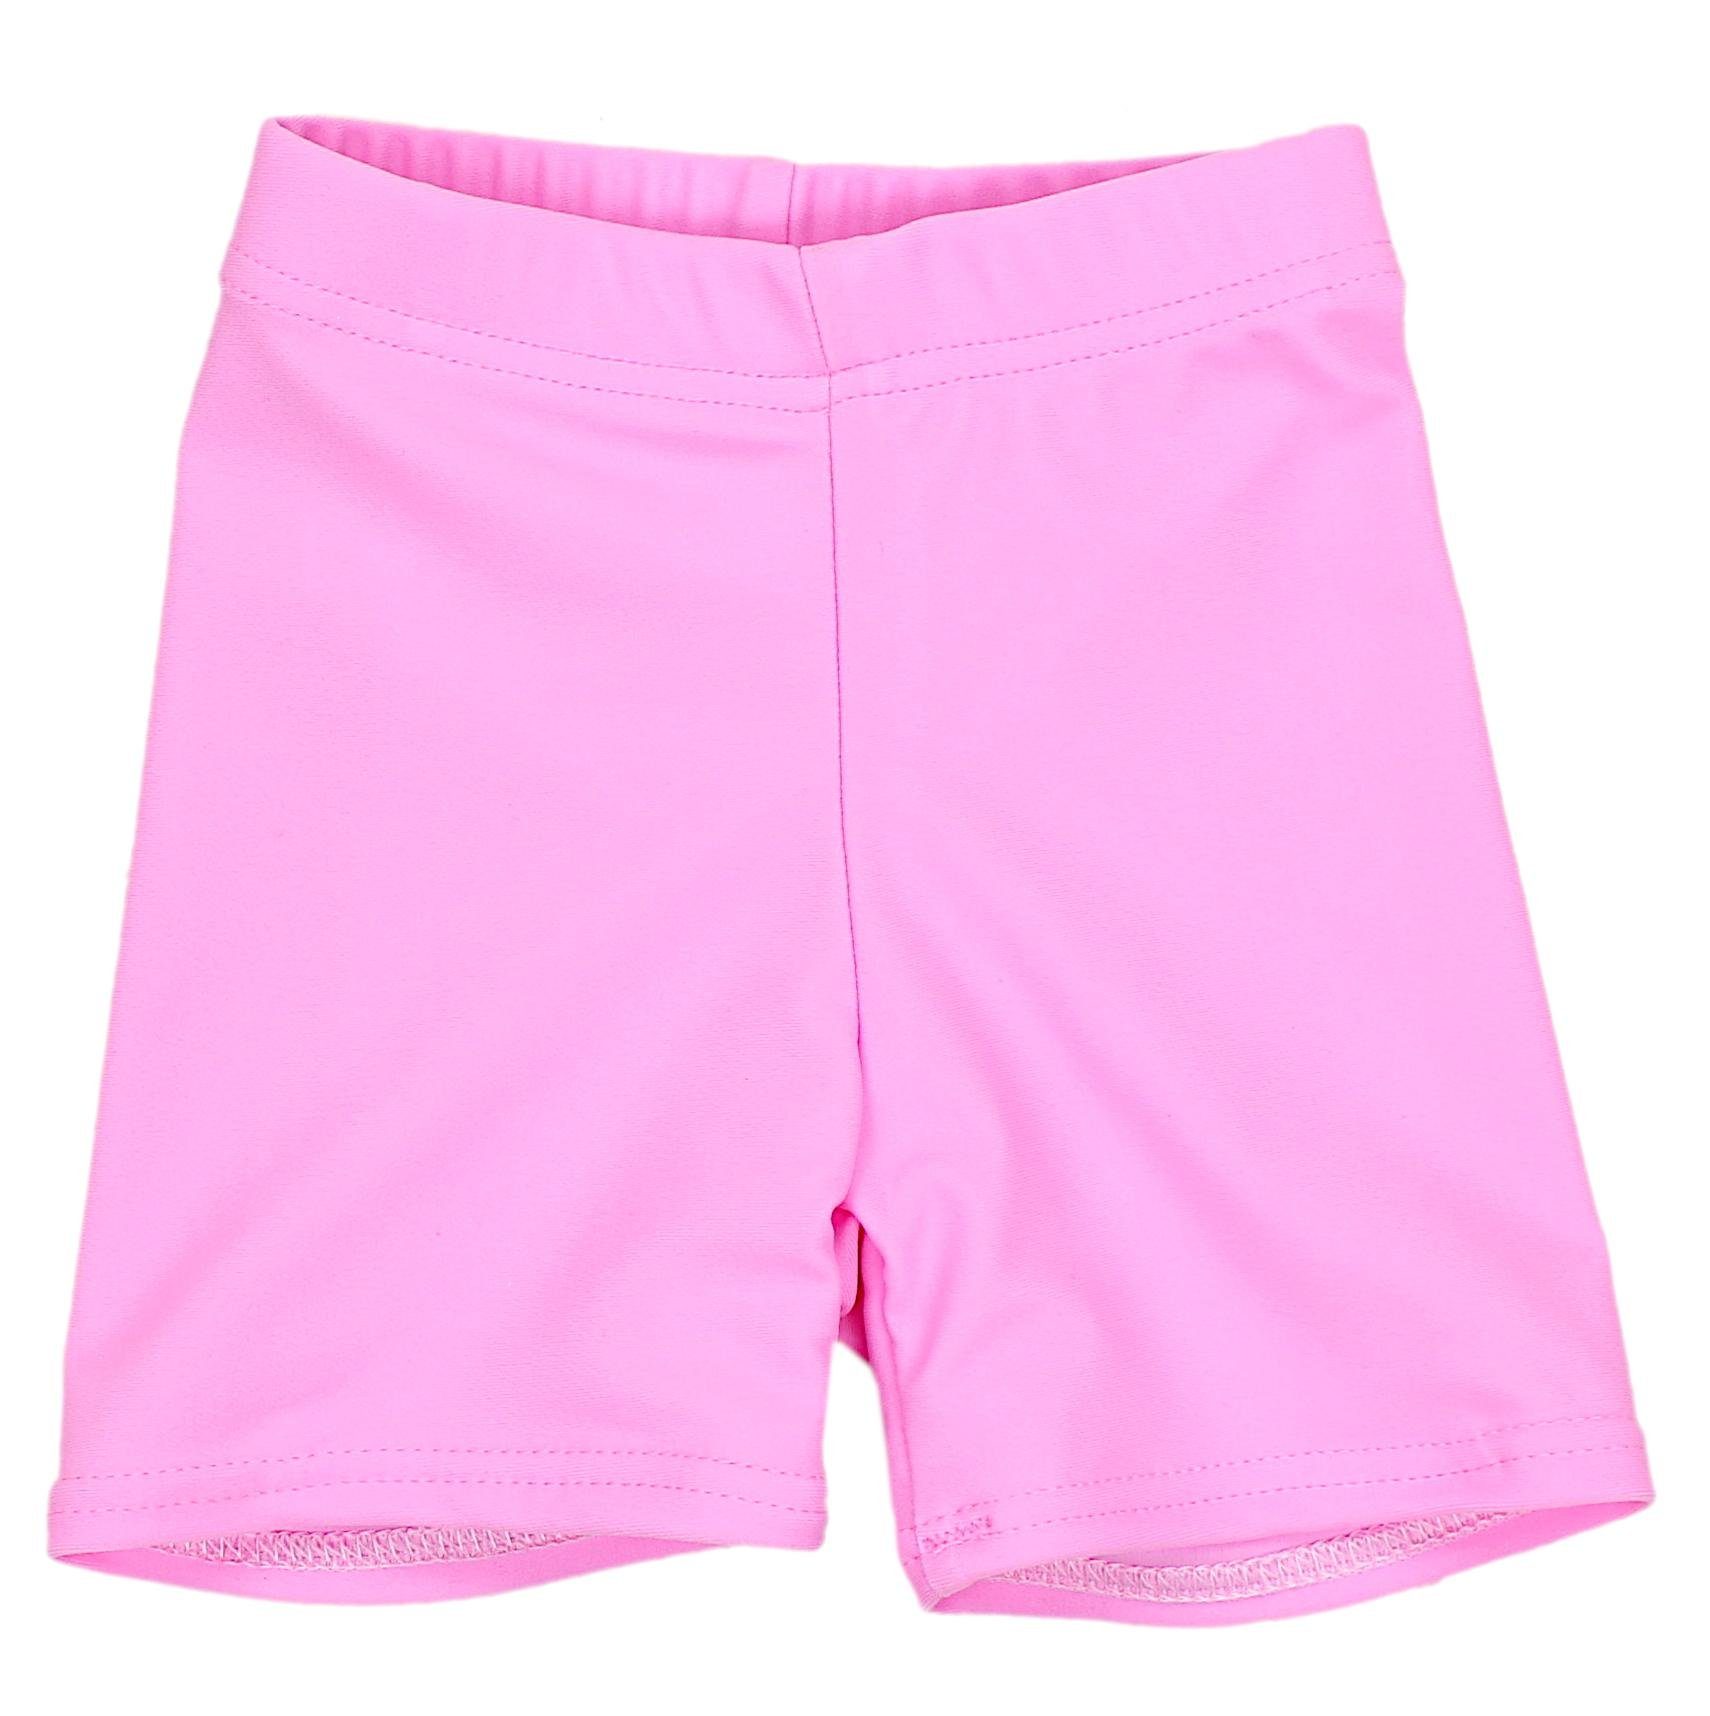 Set / Rosa Shirt UV-Schutz Kinder Badehose Baby Aquarti Badeanzug Flamingos Mädchen Zweiteiler Badeanzug Hellgrün